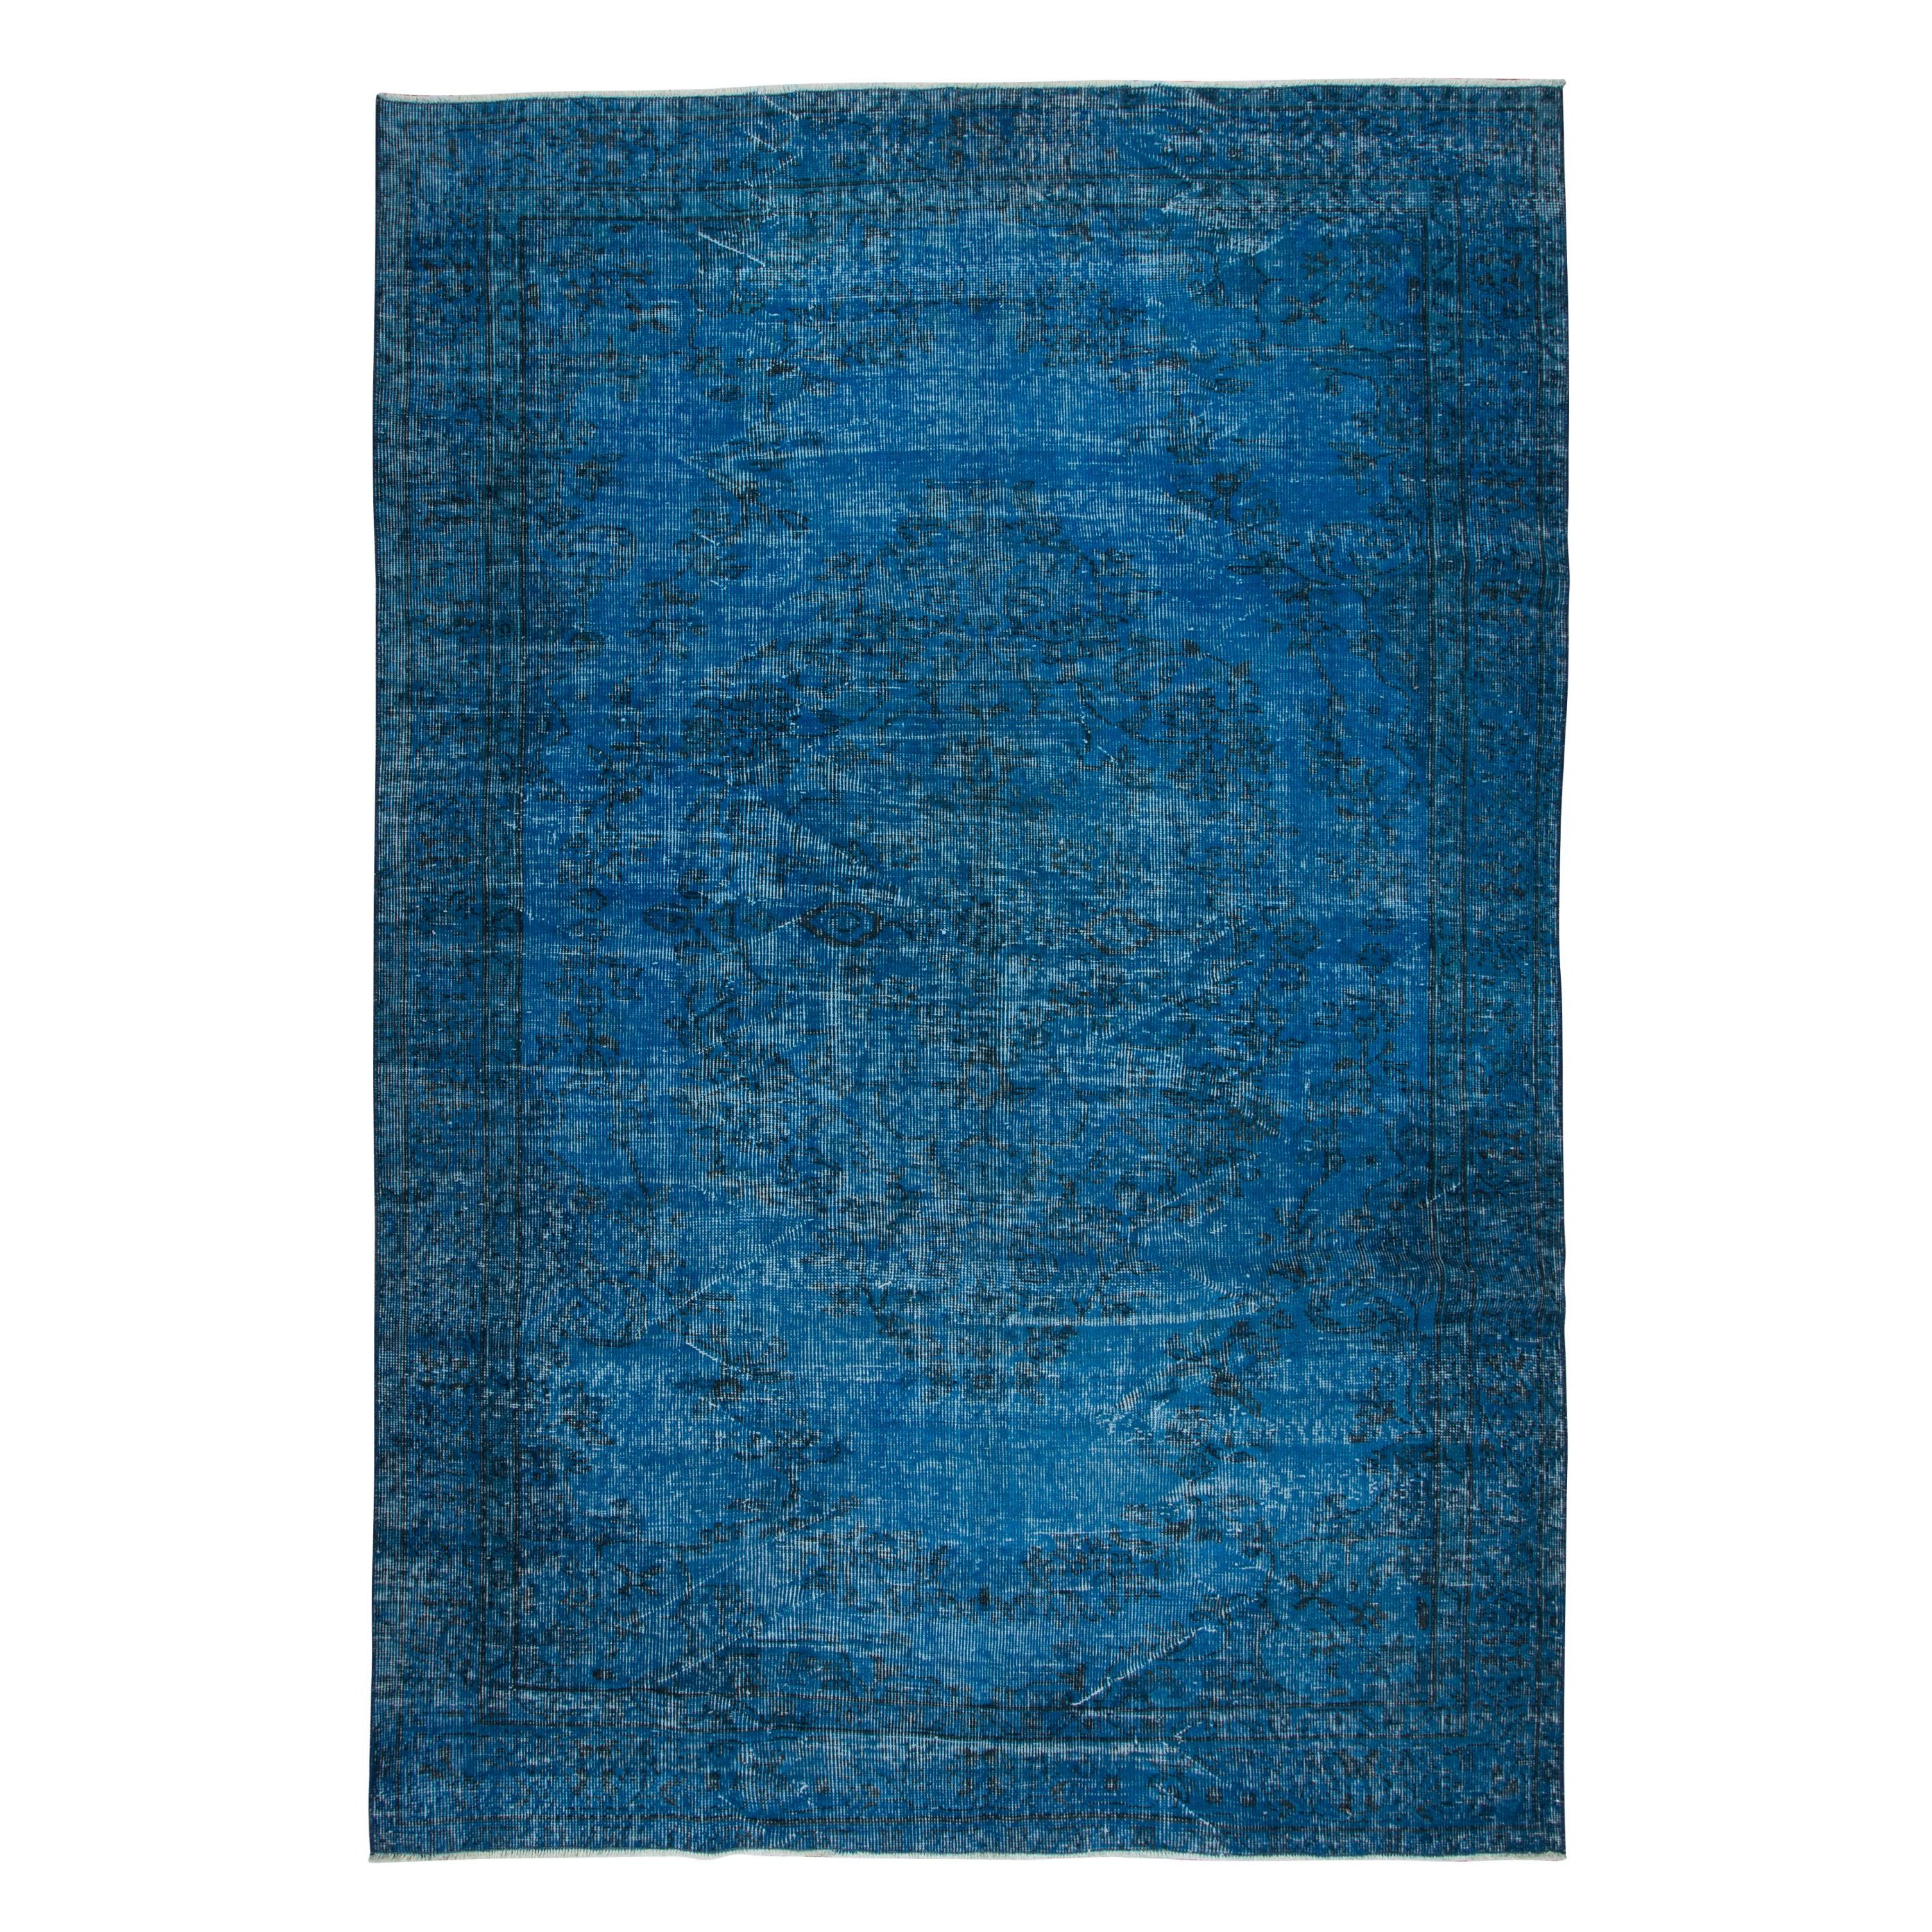 5.6x8.2 Ft Handmade Blue Area Rug from Turkey, Modern Anatolian Wool Carpet (tapis de laine anatolien moderne)